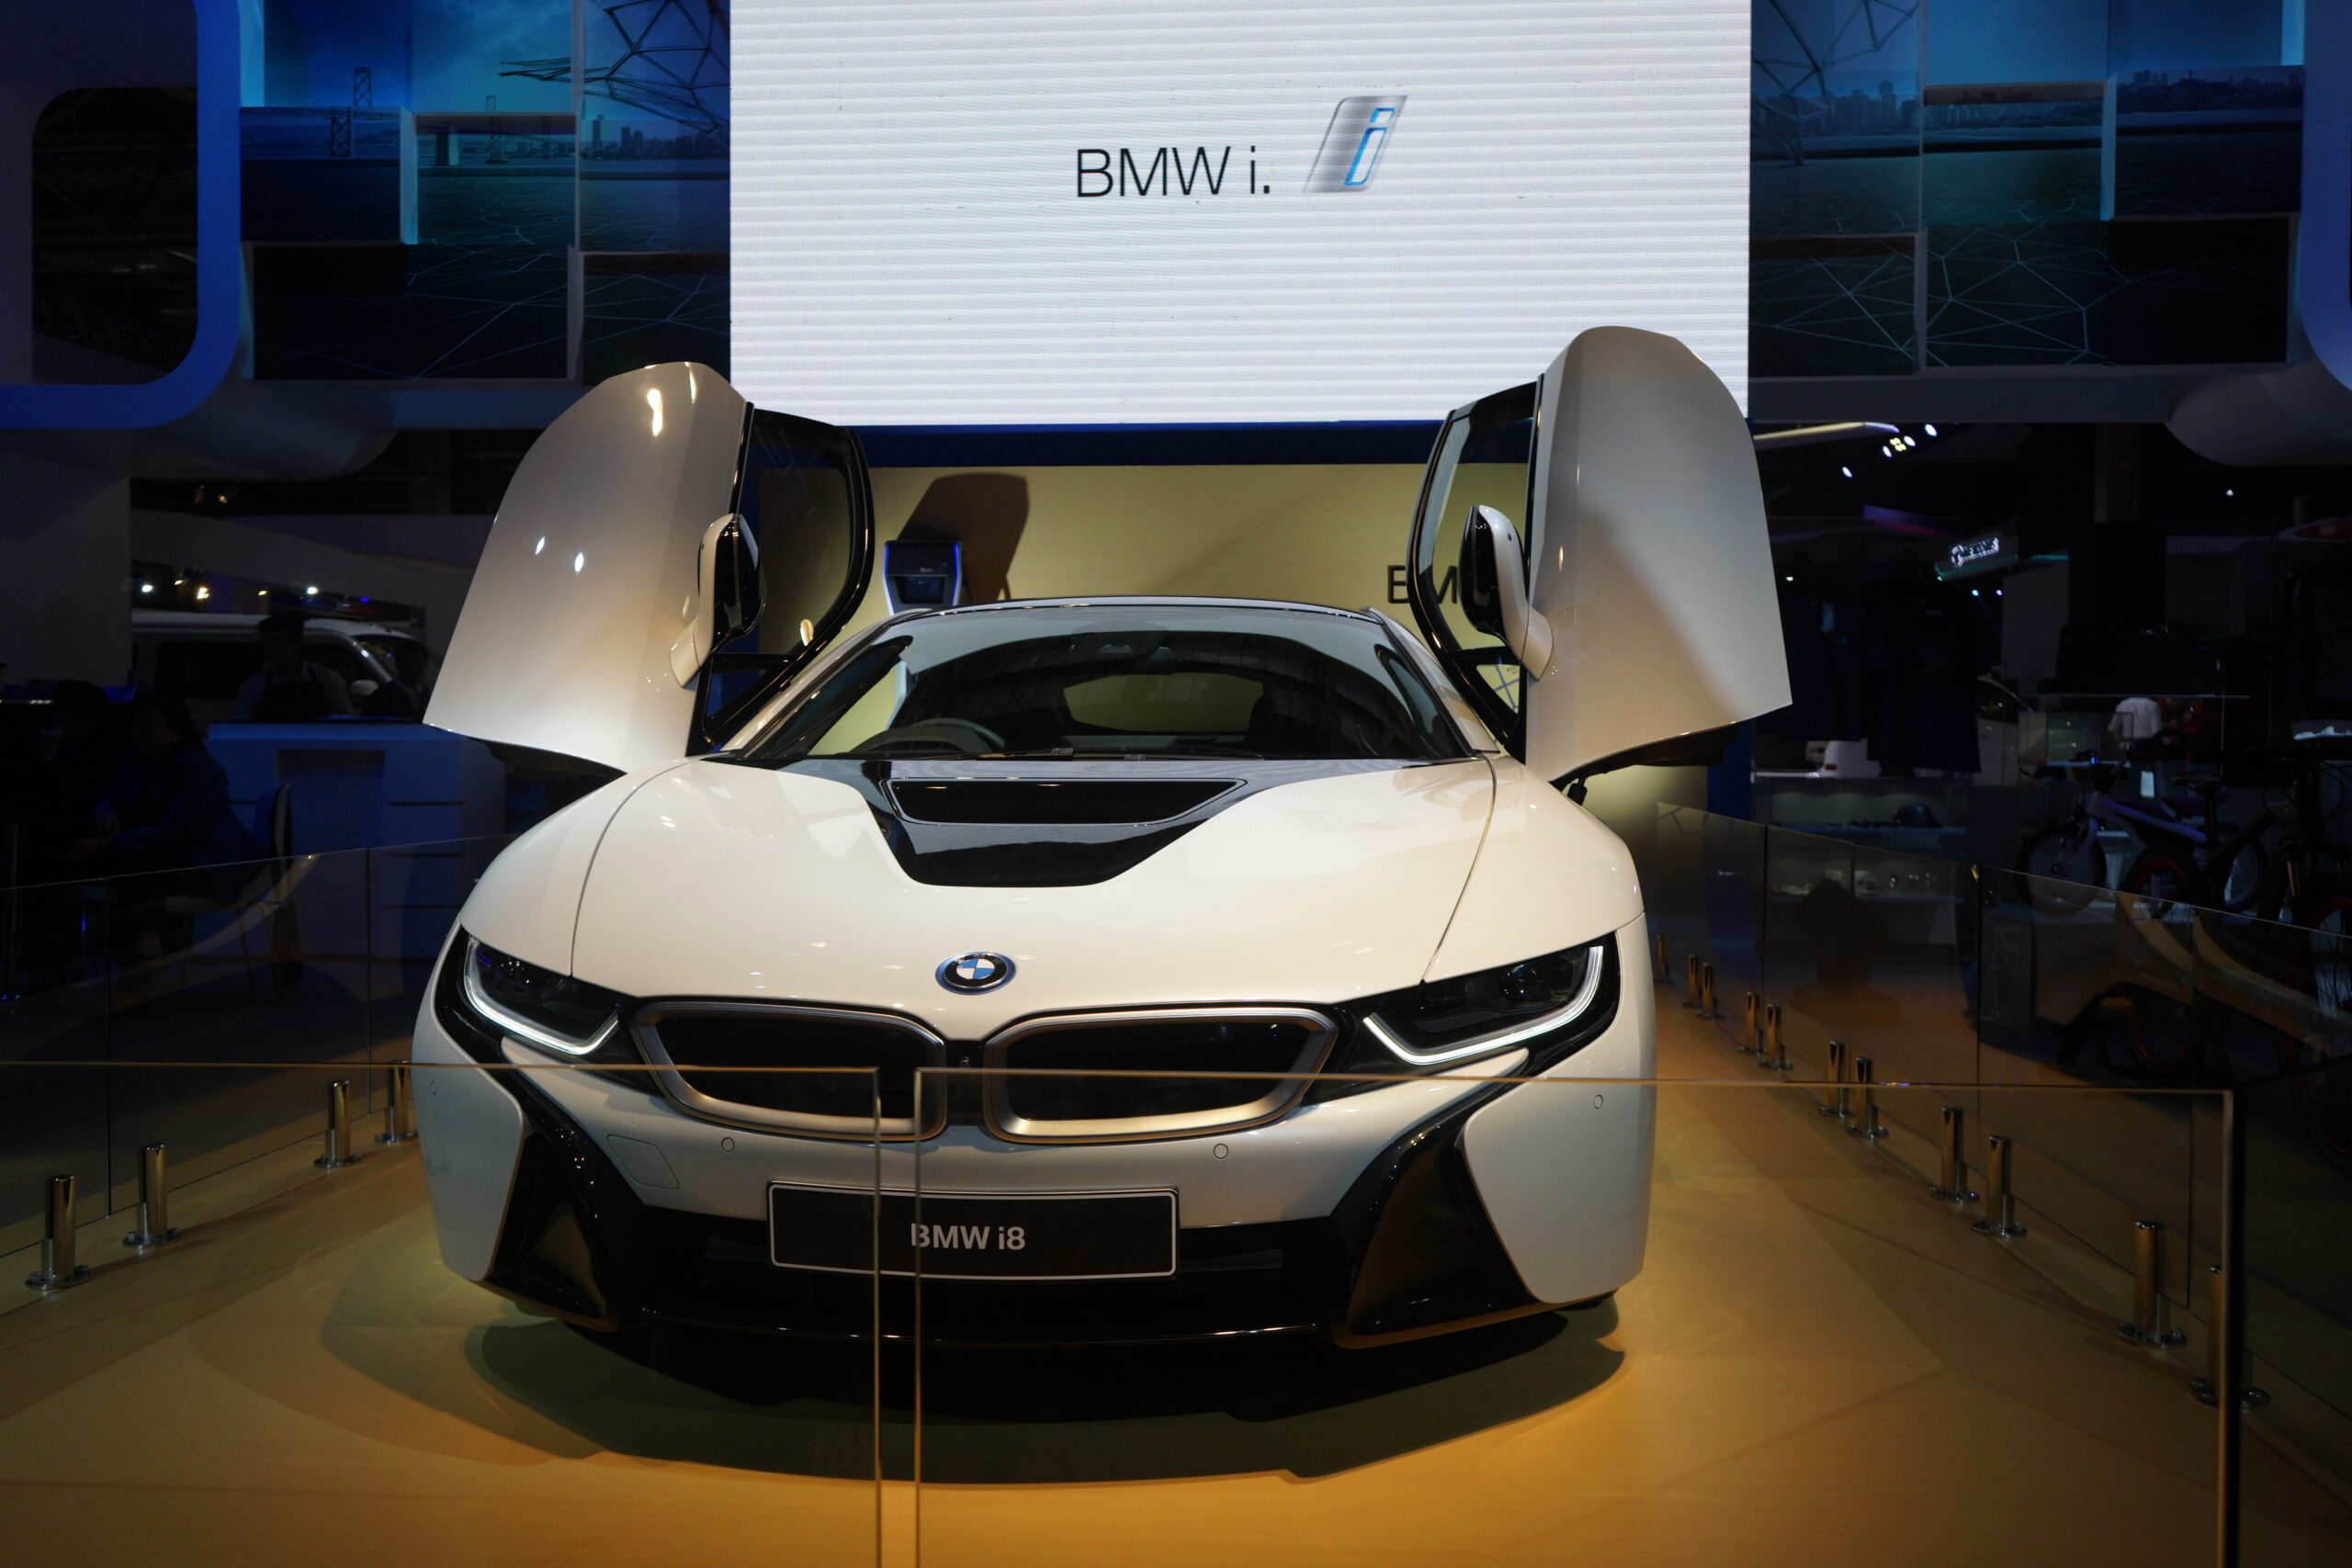 Lexus, BMW showcase hybrid supercars at PH auto show